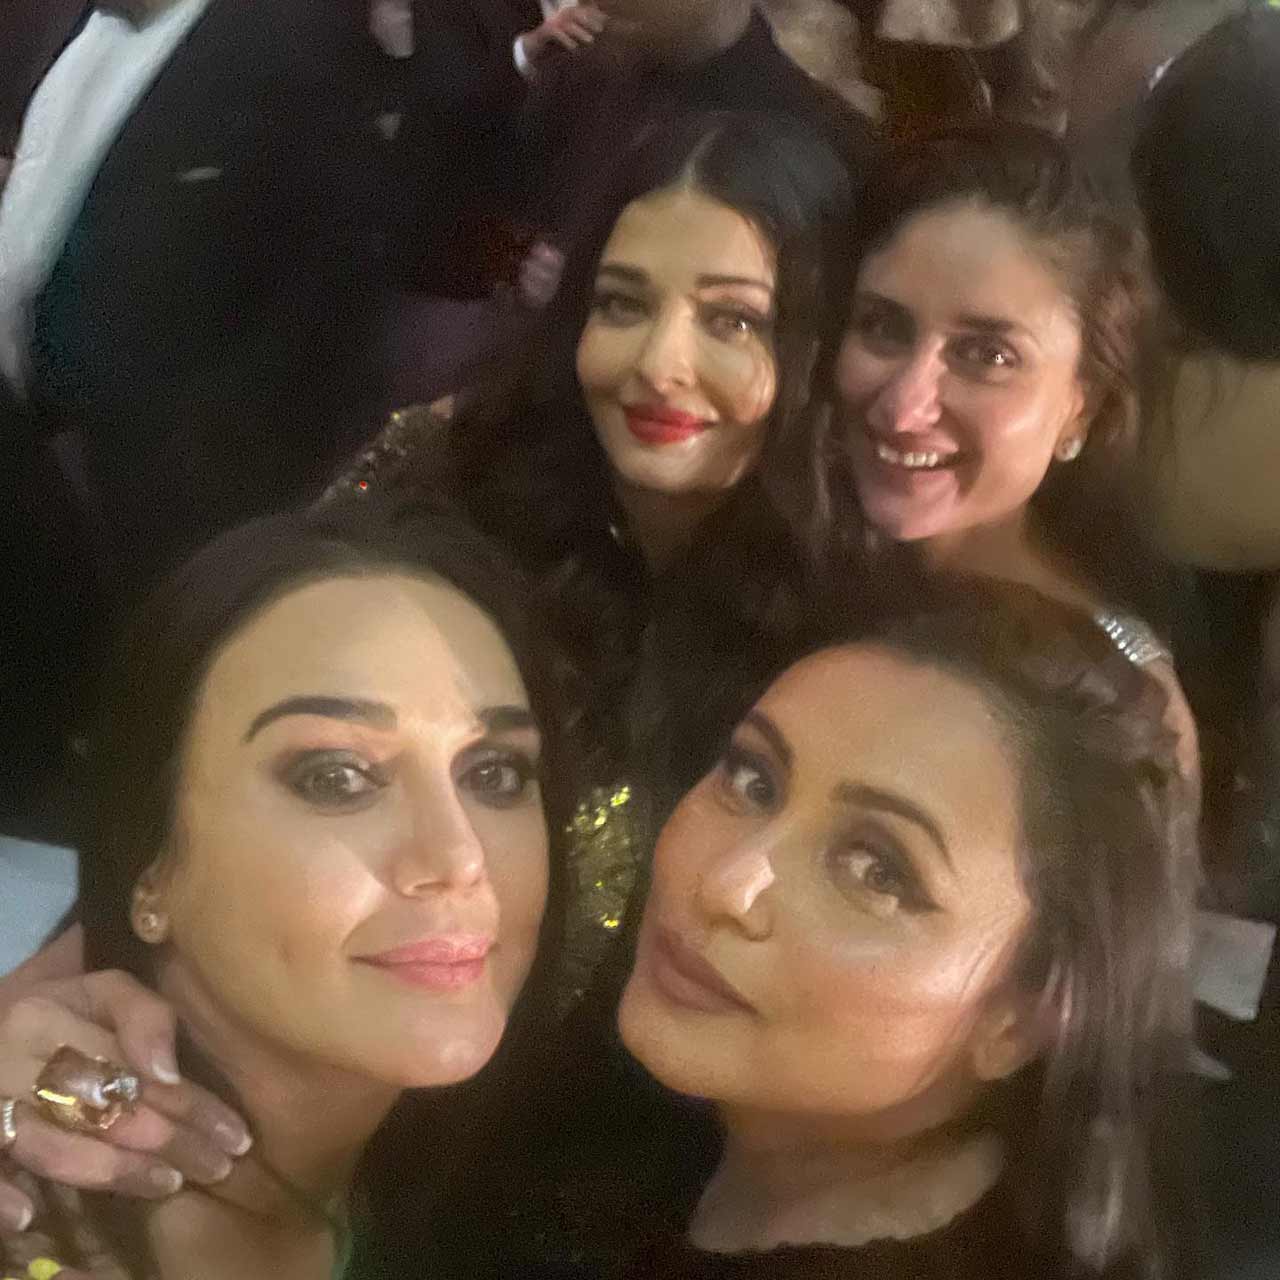 Rani Mukerji, Preity Zinta, Aishwarya Rai Bachchan, Kareena Kapoor Khan posed together as they partied together at Karan Johar's 50th birthday bash.